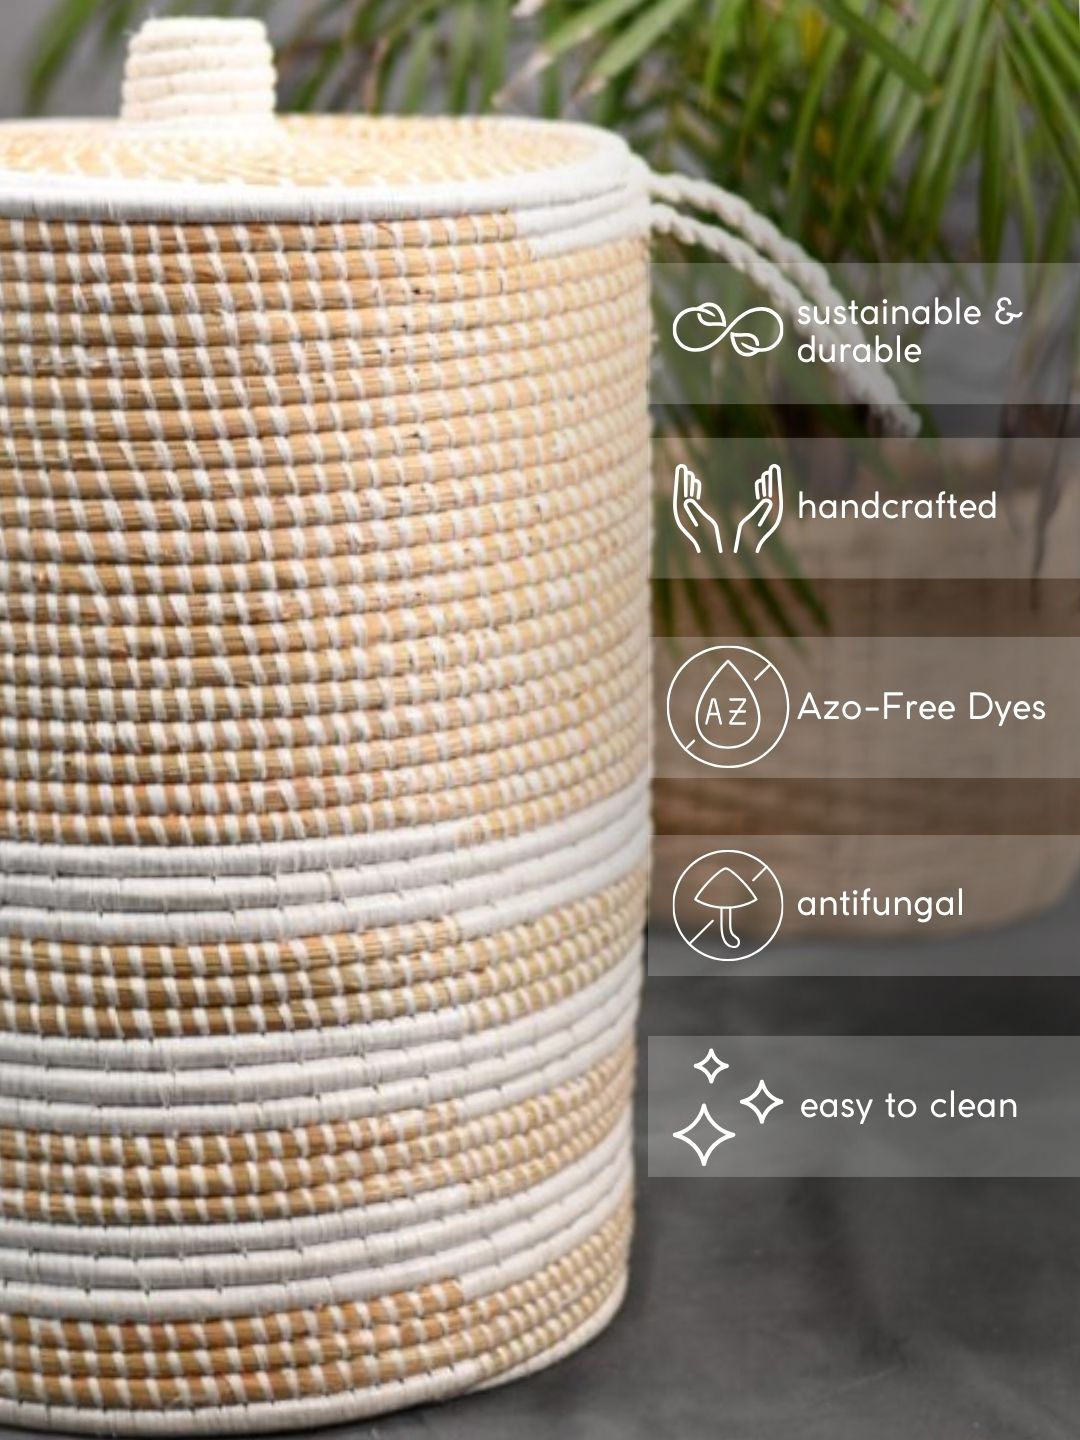 Handmade Moonj Grass Laundry Basket - White - Line - Kadam Haat